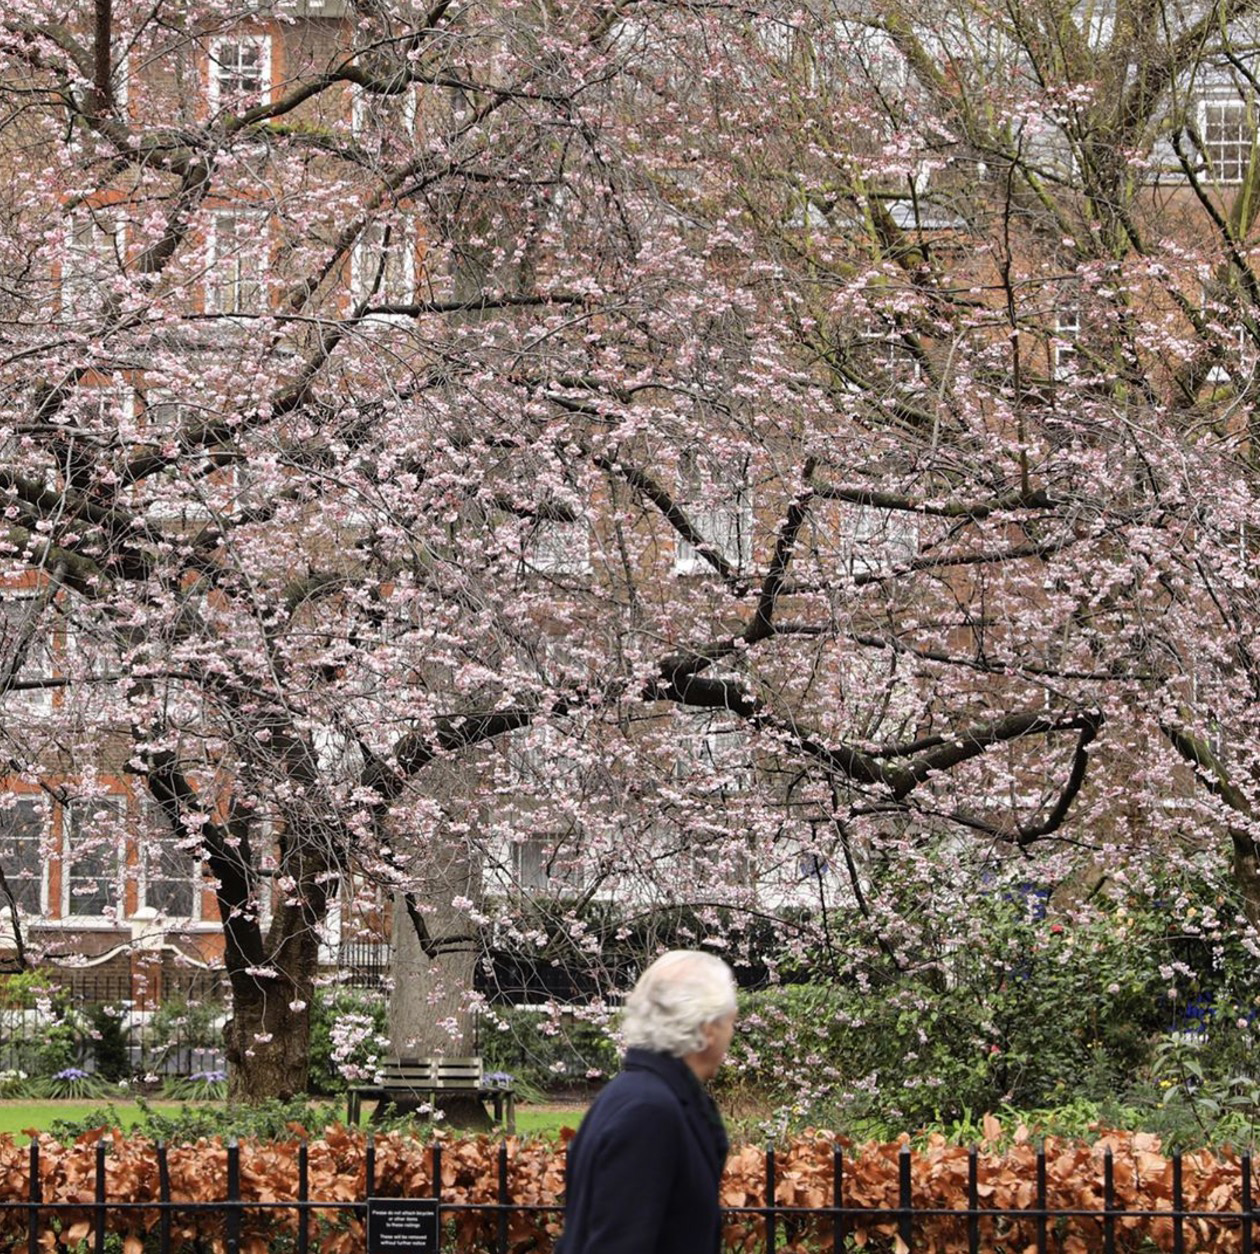 Trees in full bloom in Kensington, London